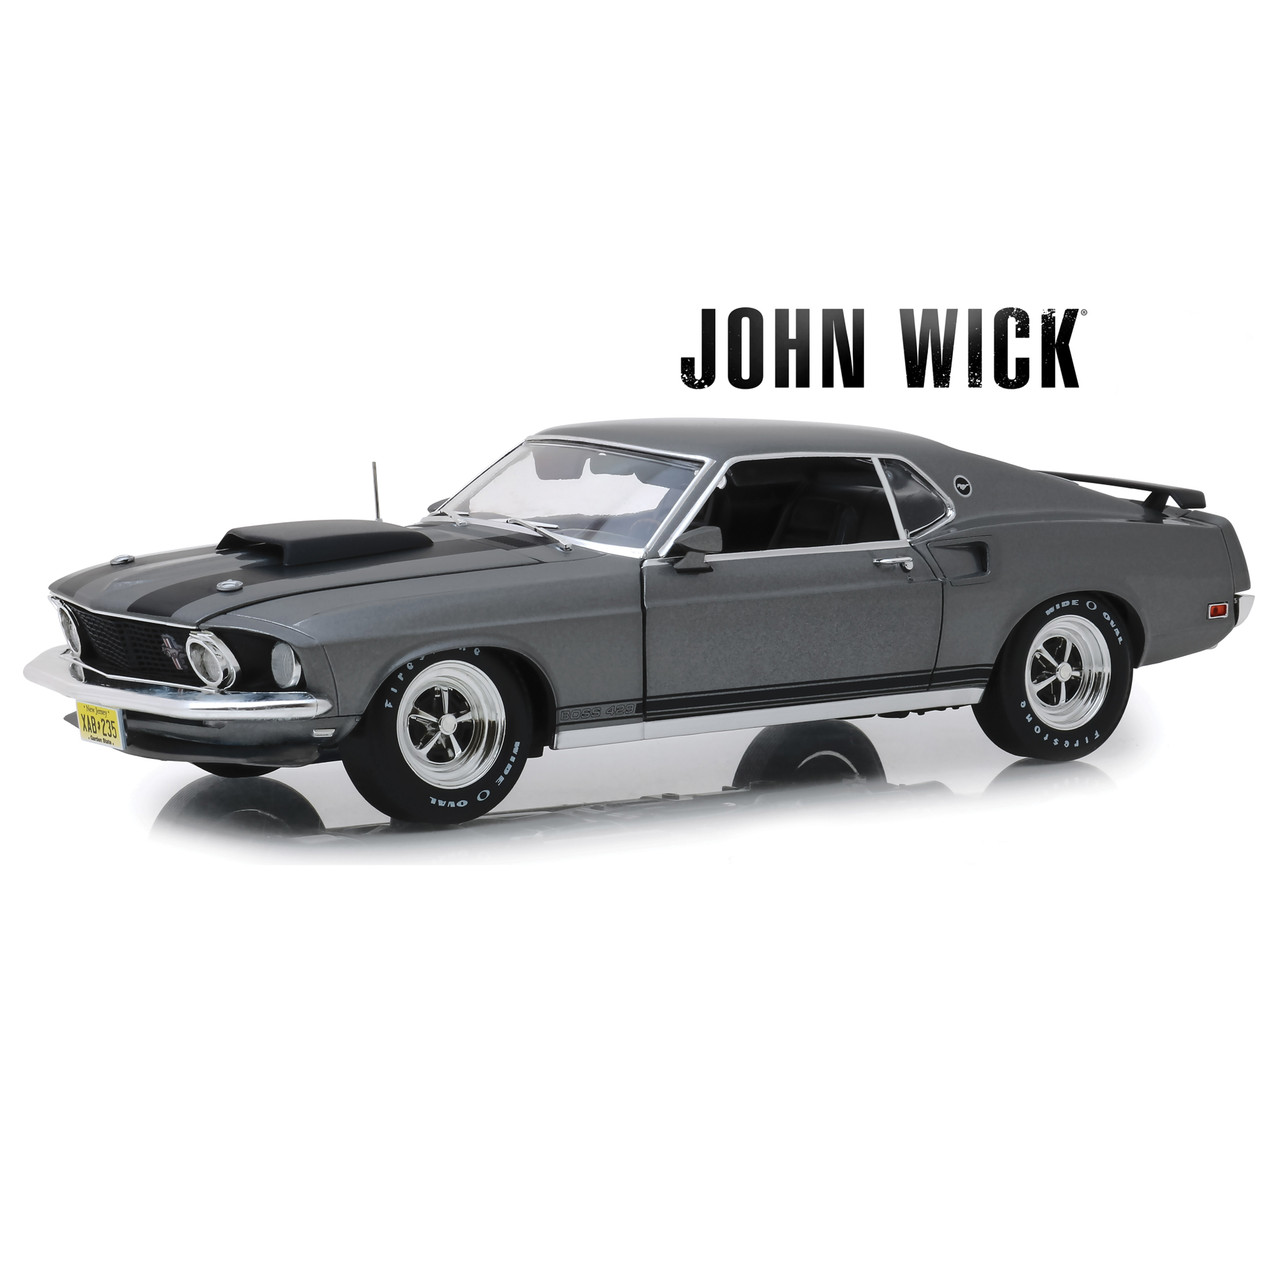 Greenlight John Wick 1969 Ford フォード Mustang BOSS 429 1/18 スケール ダイキャストカー ダイキャスト 車のおもちゃ 車 おもちゃ コレクション ミニチュア ダイカスト モデルカー ミニカー アメ車 ギフト プレゼント